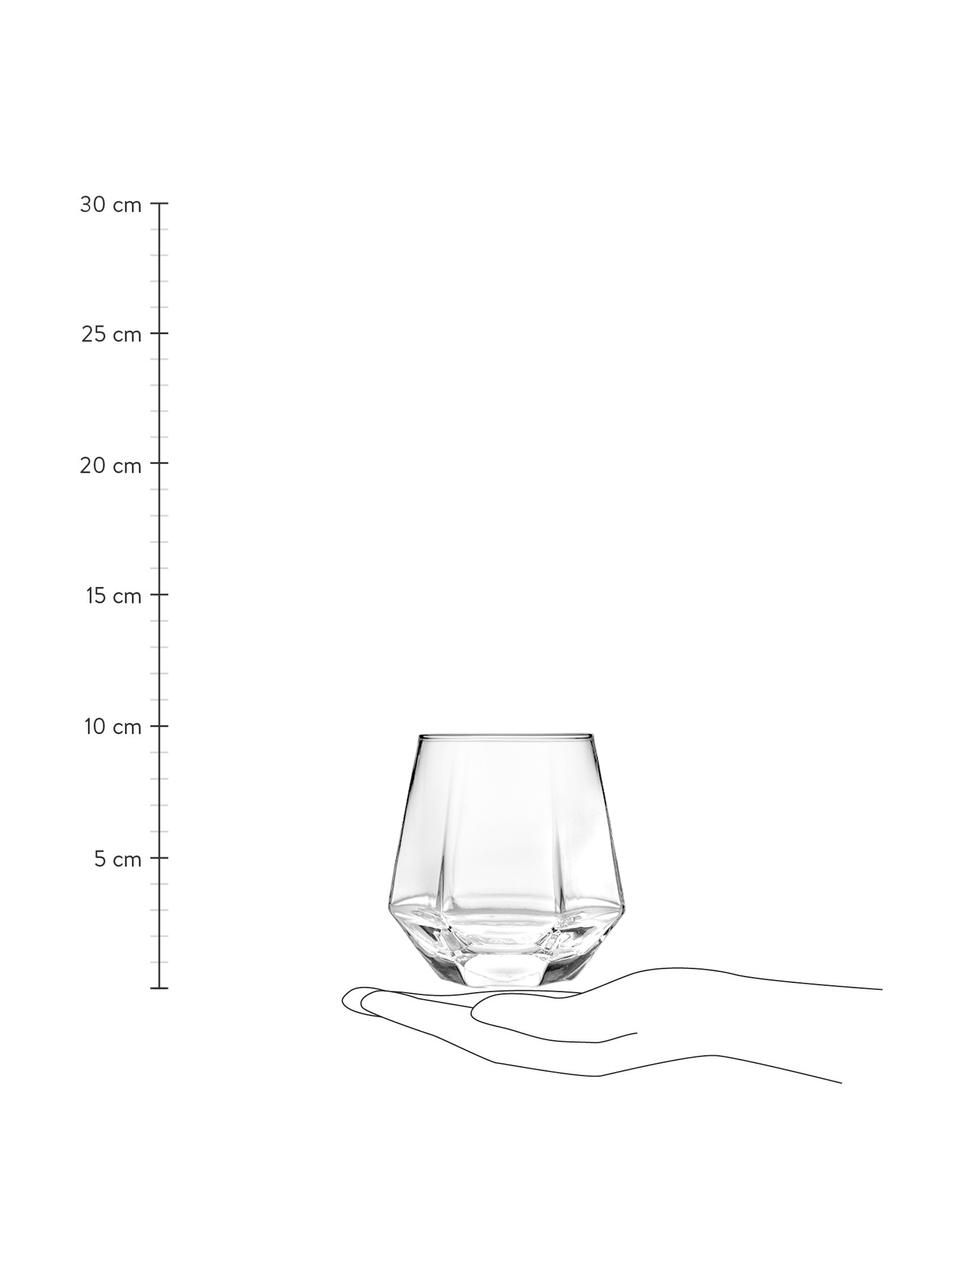 Bicchiere acqua in vetro soffiato Jaxon 4 pz, Vetro, Trasparente, Ø 9 x Alt. 10 cm, 310 ml